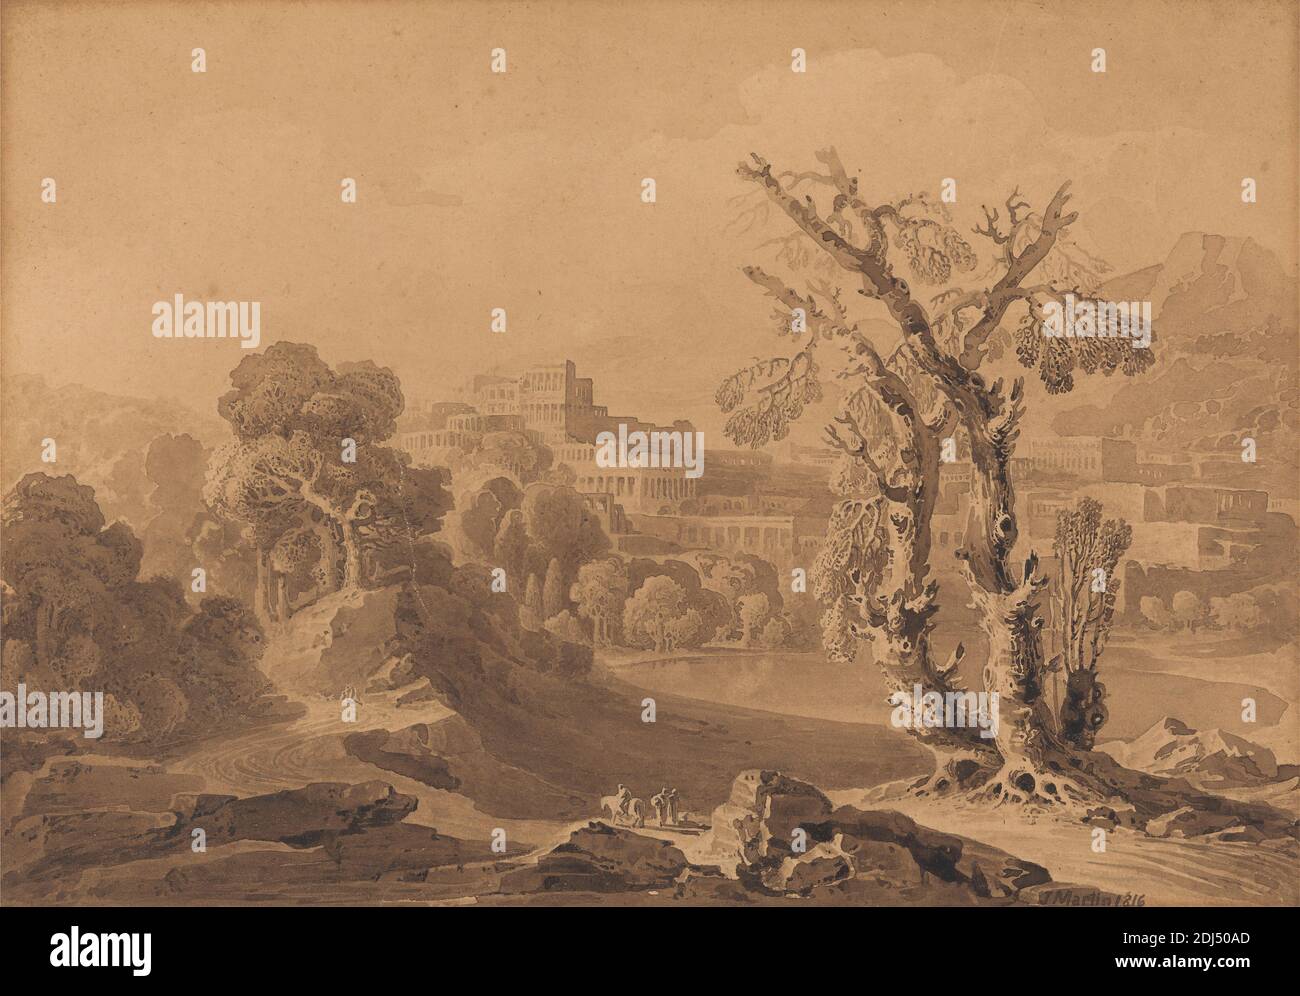 Classical City in Landscape, John Martin, 1789–1854, British, 1816, Brown wash with Pen and black ink on mäßig dick, smooth, beige wove paper mounted on Board, Mount: 8 1/4 x 11 1/16 inches (21 x 28.1 cm), Sheet: 8 1/4 x 11 1/16 inches (21 x 28.1 cm), and Image: 6 7/16 x 9 1/4 Zoll (16.4 x 23.5 cm), Gebäude, Stadtbild, Klassik, Säulen, Genre, Landschaft, Berge, Pfad, Teich, Straße, Bäume Stockfoto